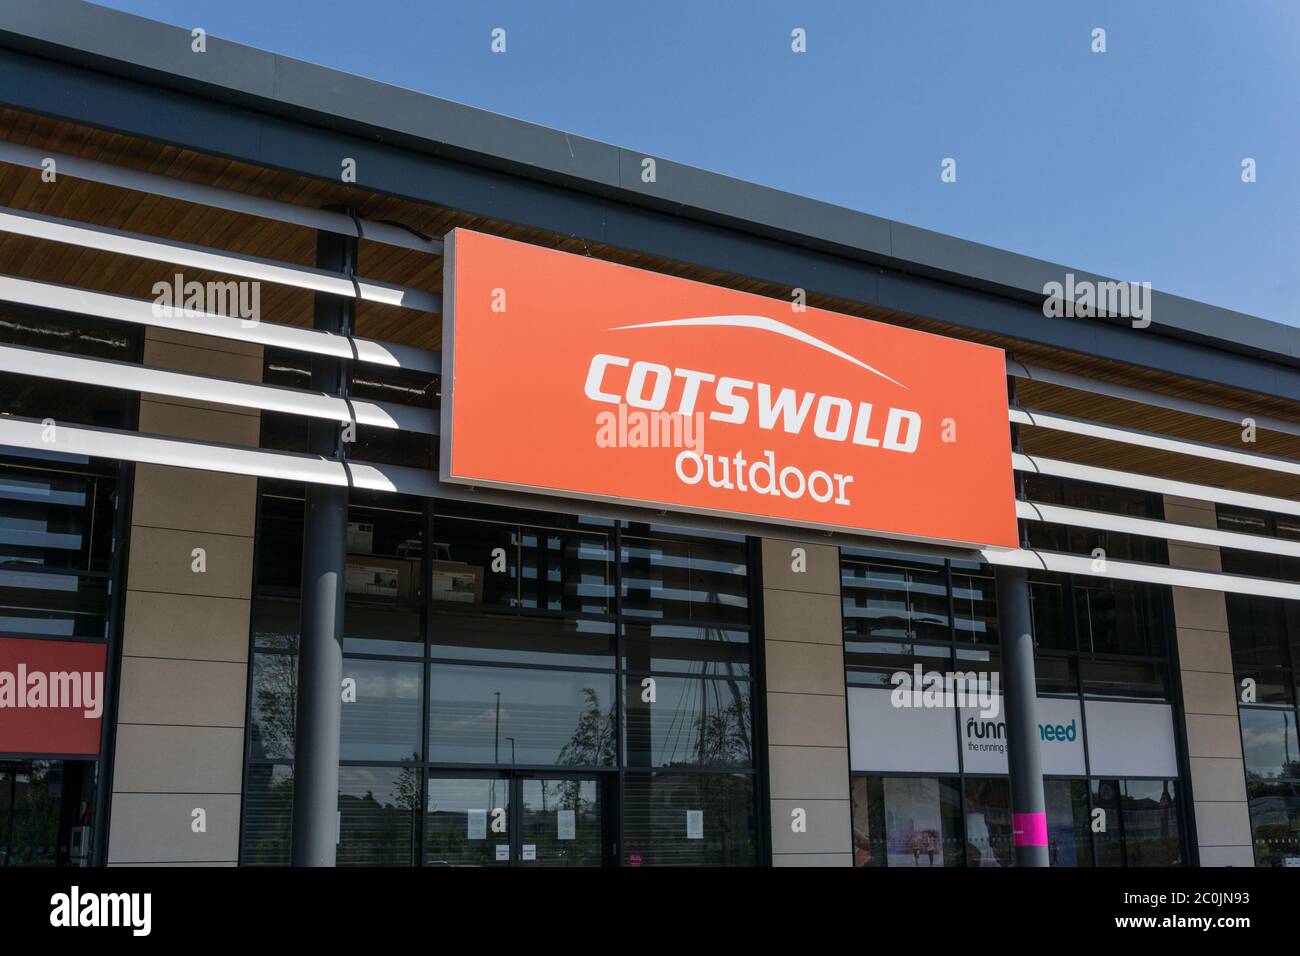 Cotswold Outdoor, ein Outdoor-Erholungseinzelhändler, Rushden Lakes Shopping Centre, Northamptonshire, Großbritannien Stockfoto